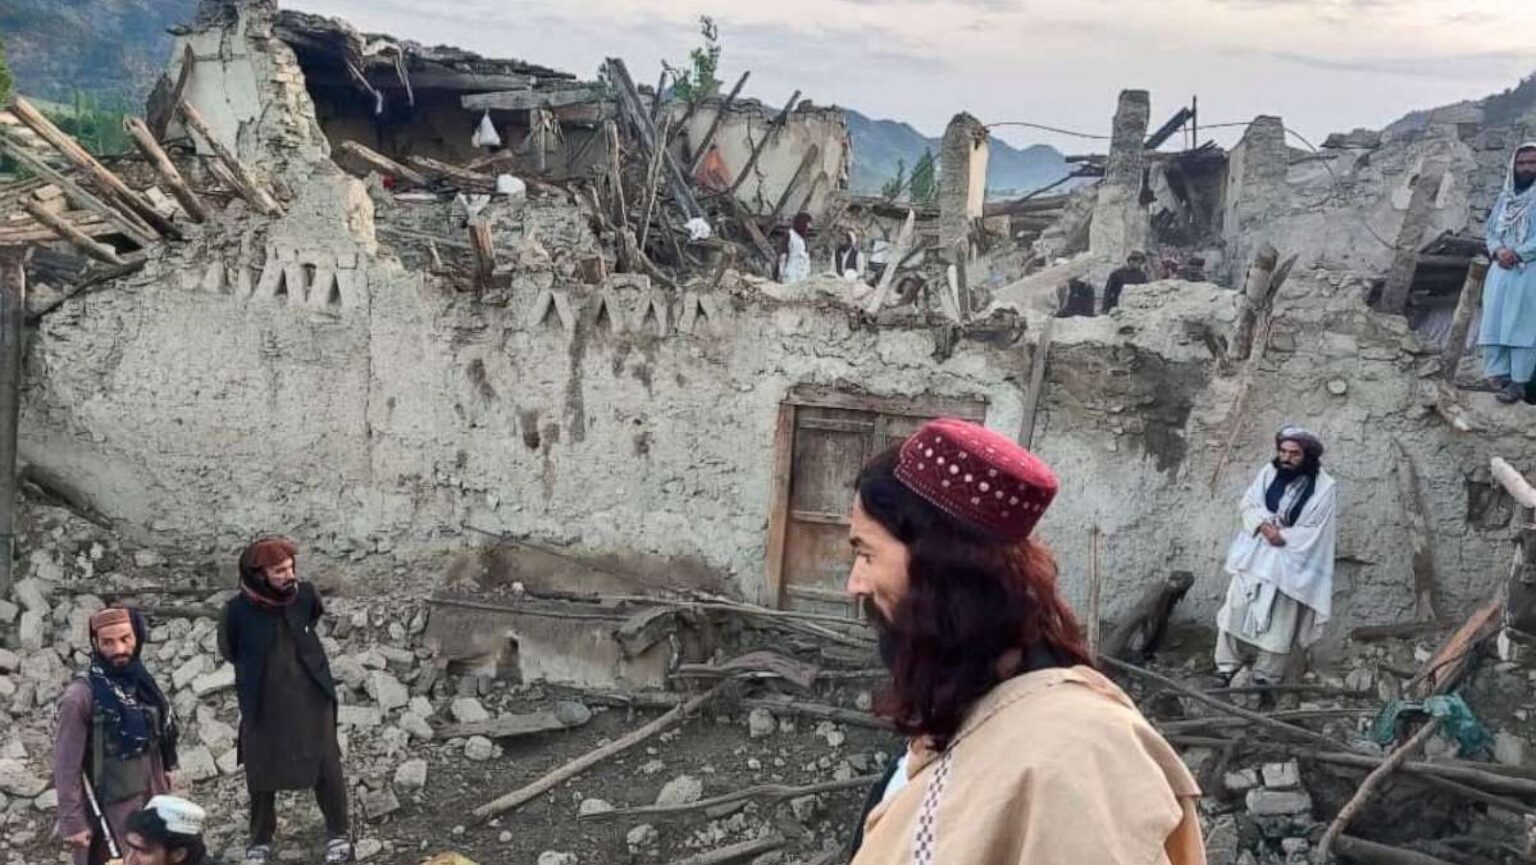 1000 people died earthquakes in Afghanistan.